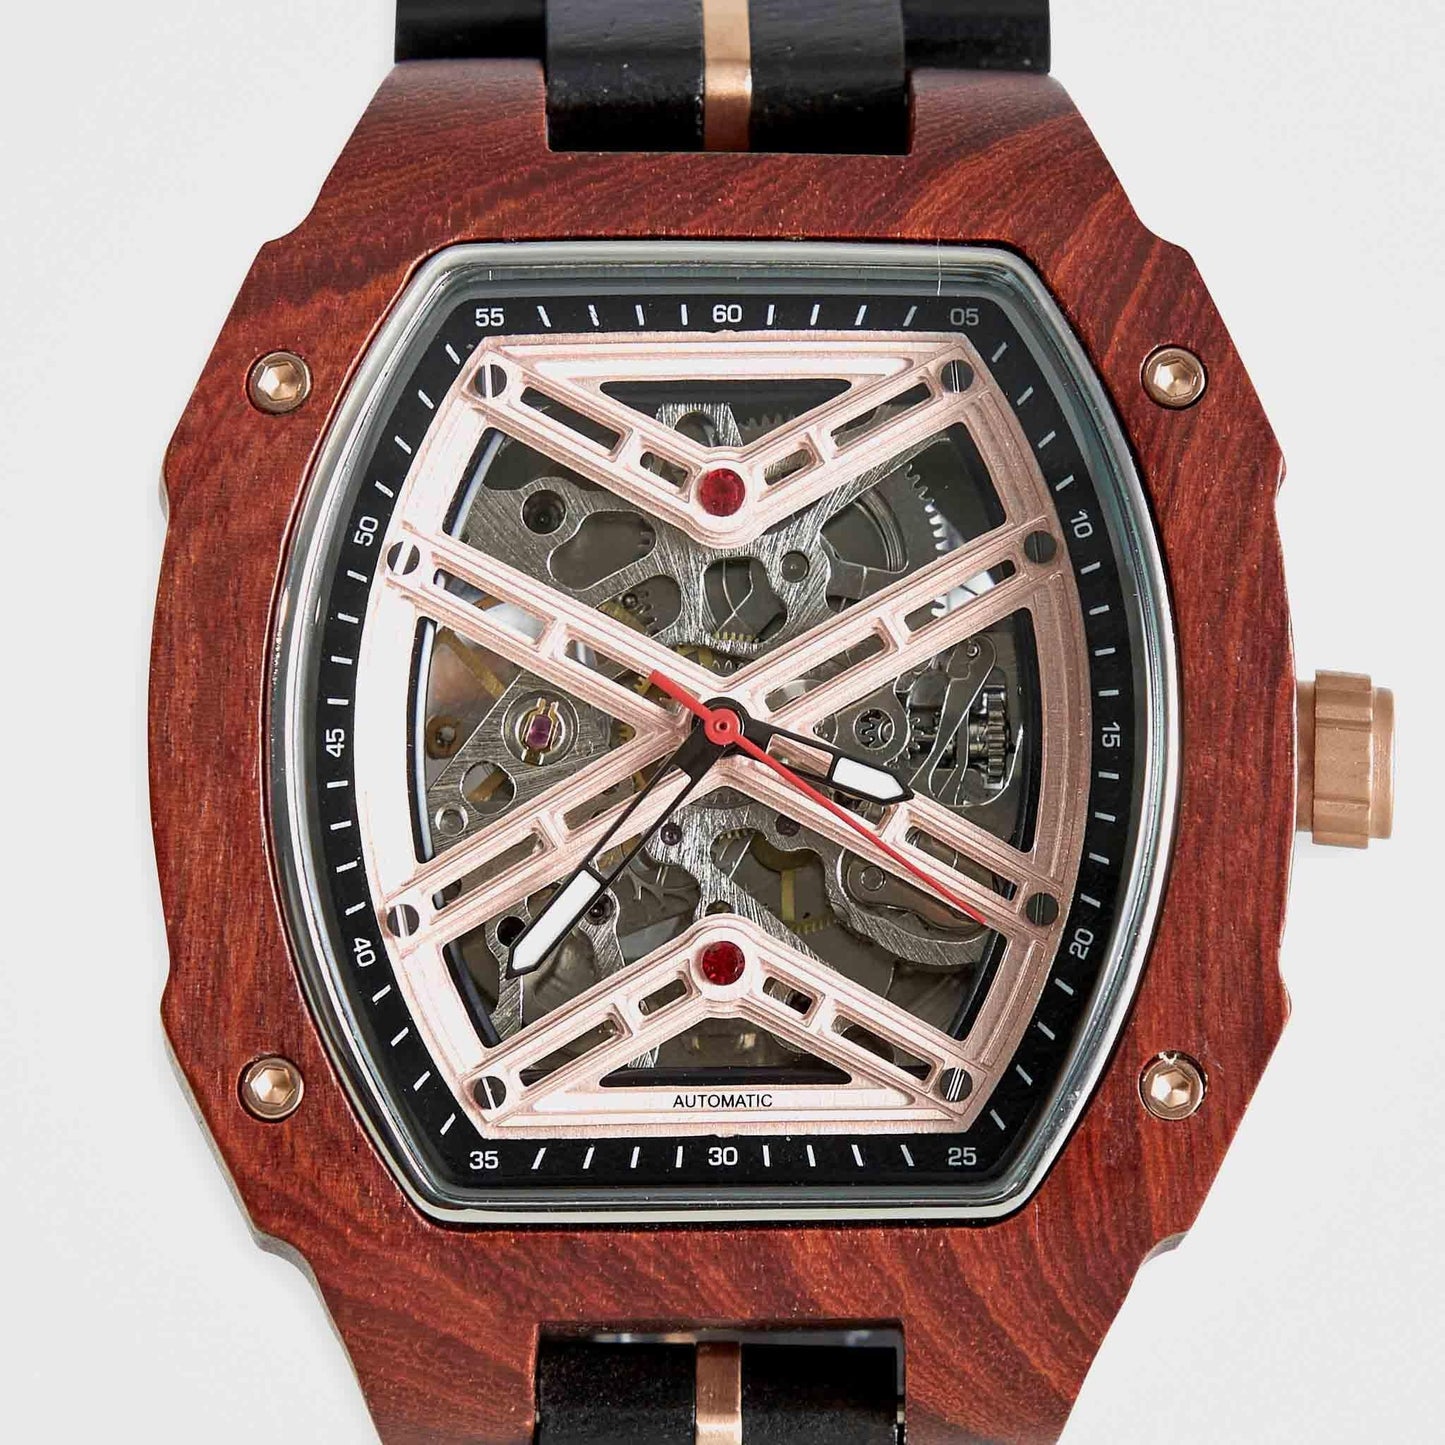 Luxury Handmade Mechanical Wristwatch For Men: The Mahogany